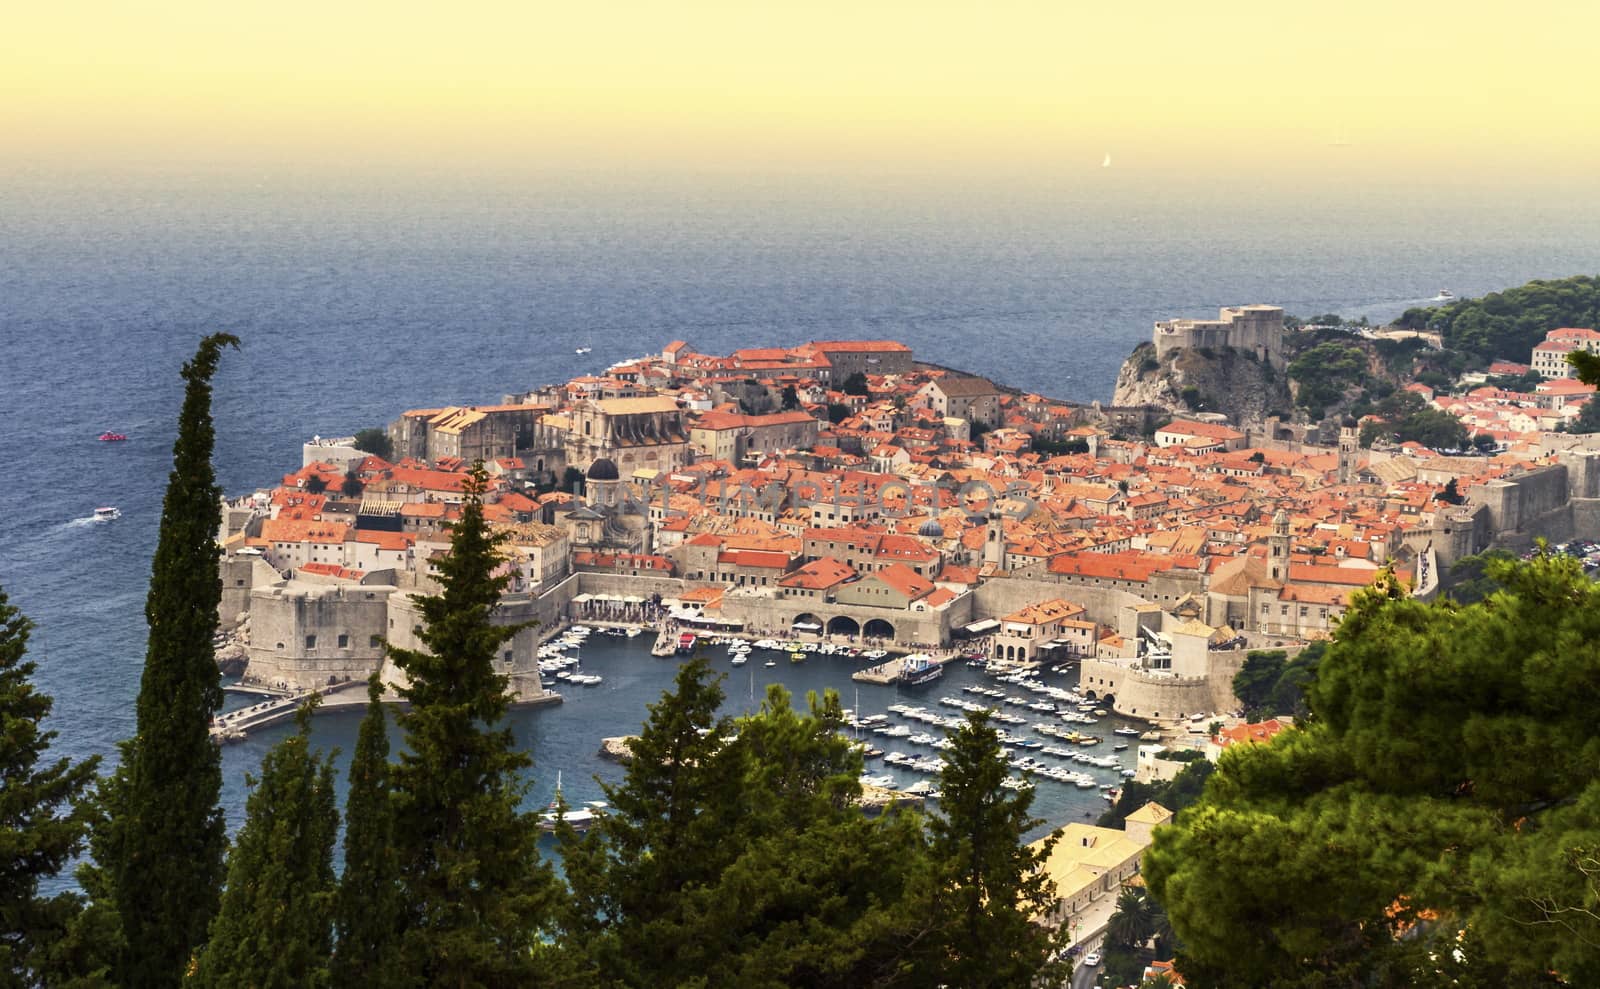 Aerial view of Dubrovnik old city on the Adriatic Sea, South Dalmatia region, Croatia